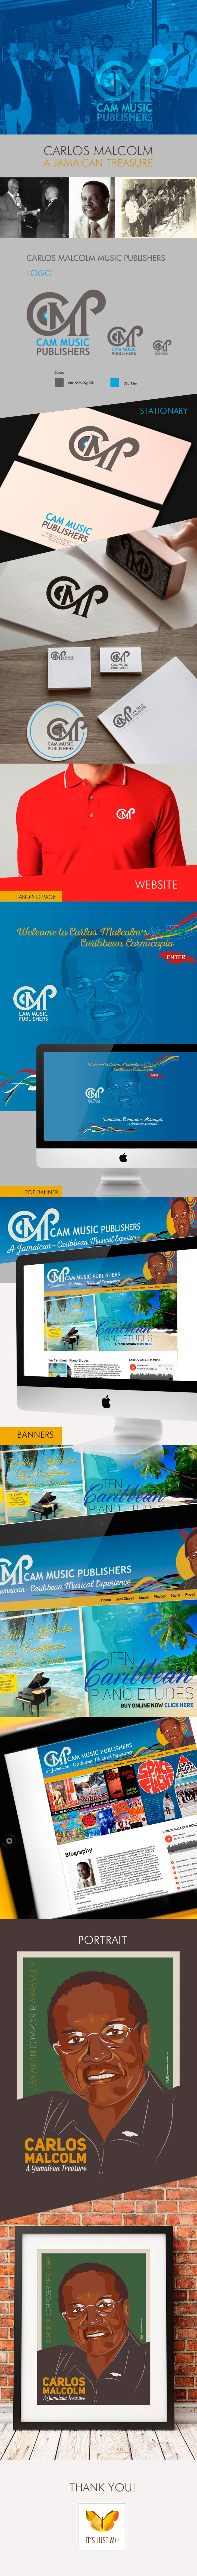 Carlos Malcolm jamaican music jamaica ska itsjustme.net